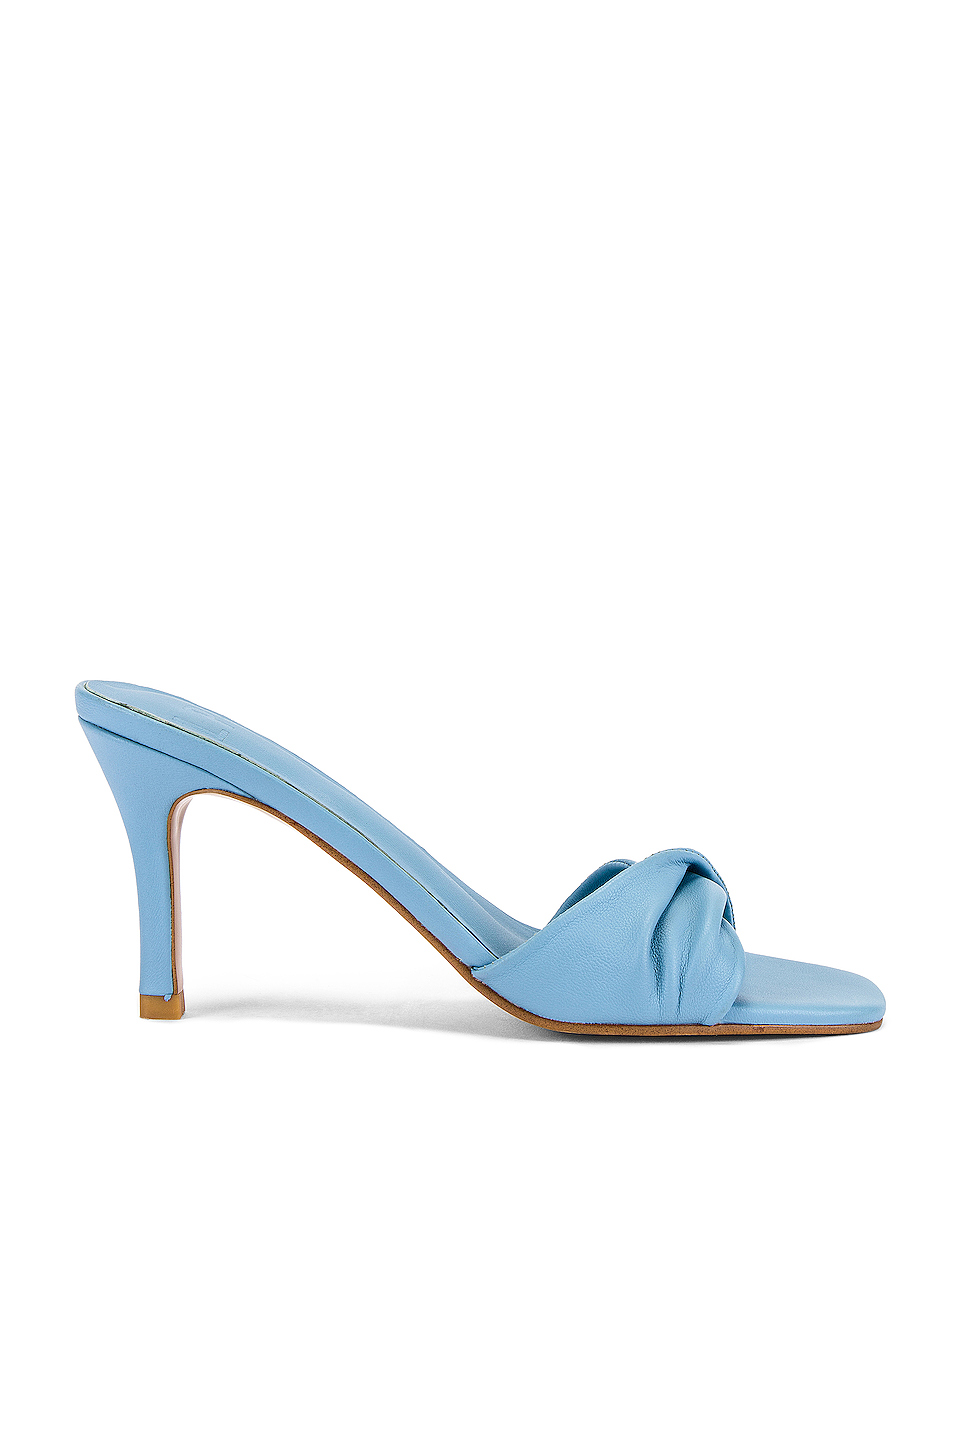 blue color heels